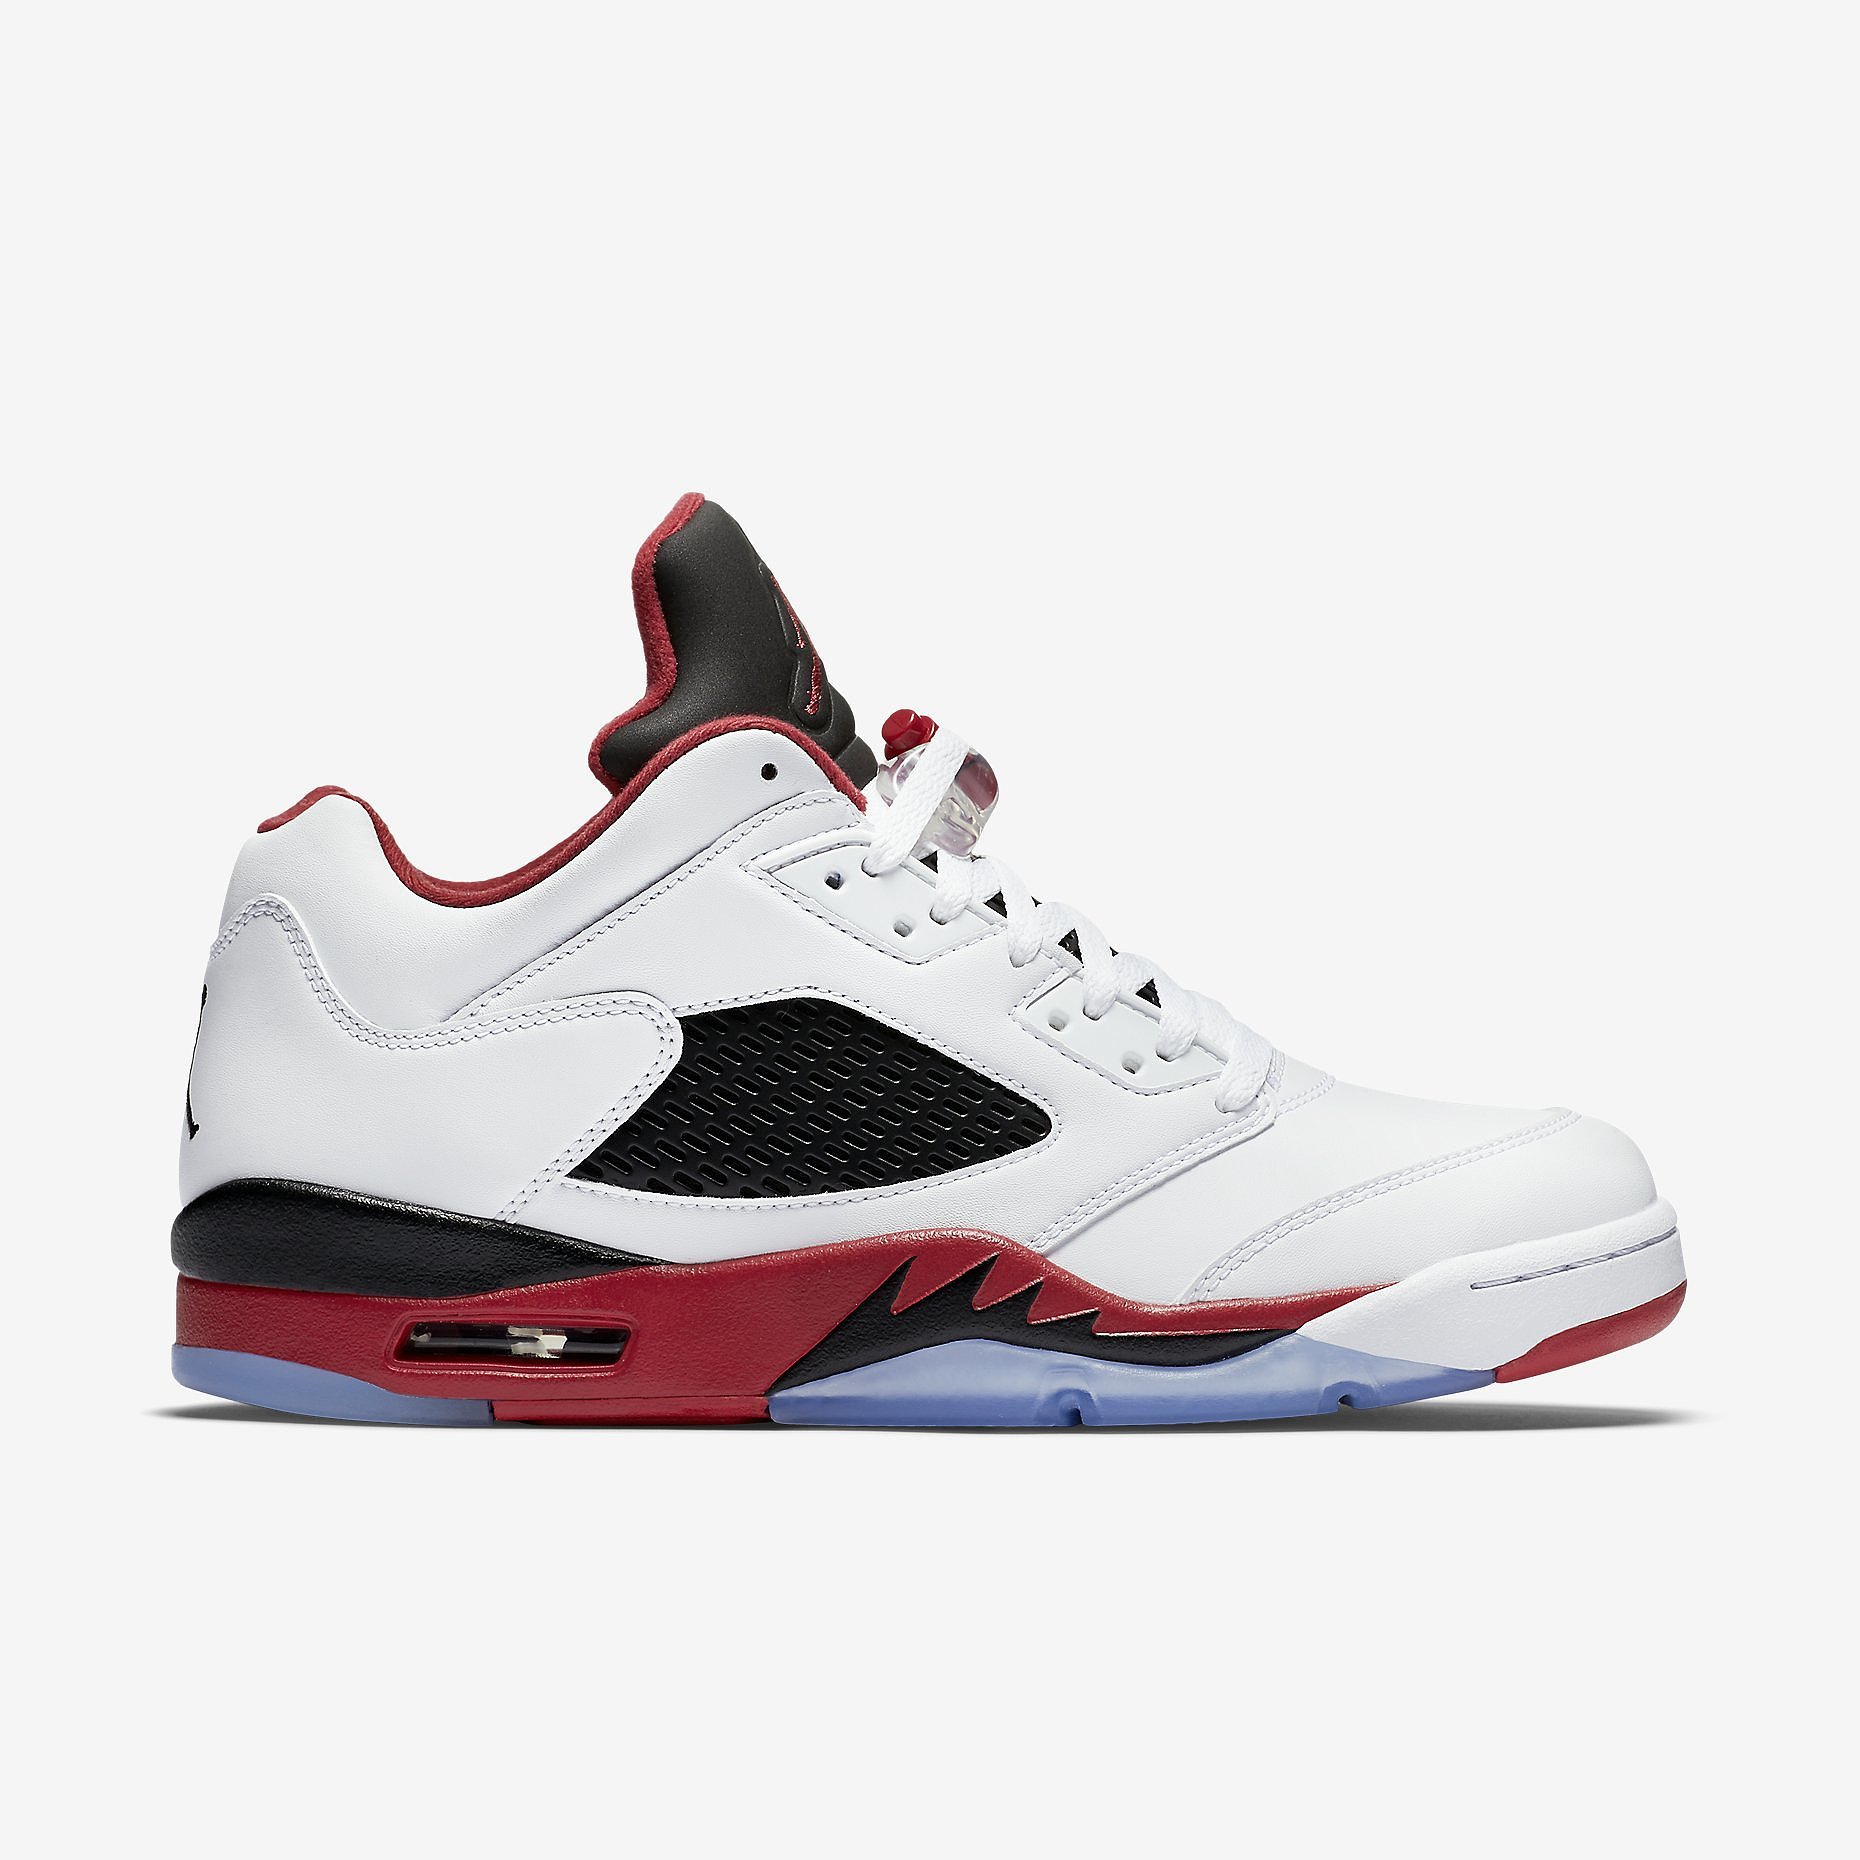 Nike Air Jordan 5 Retro Low ($175) | Gigi Hadid's NYC Essentials May